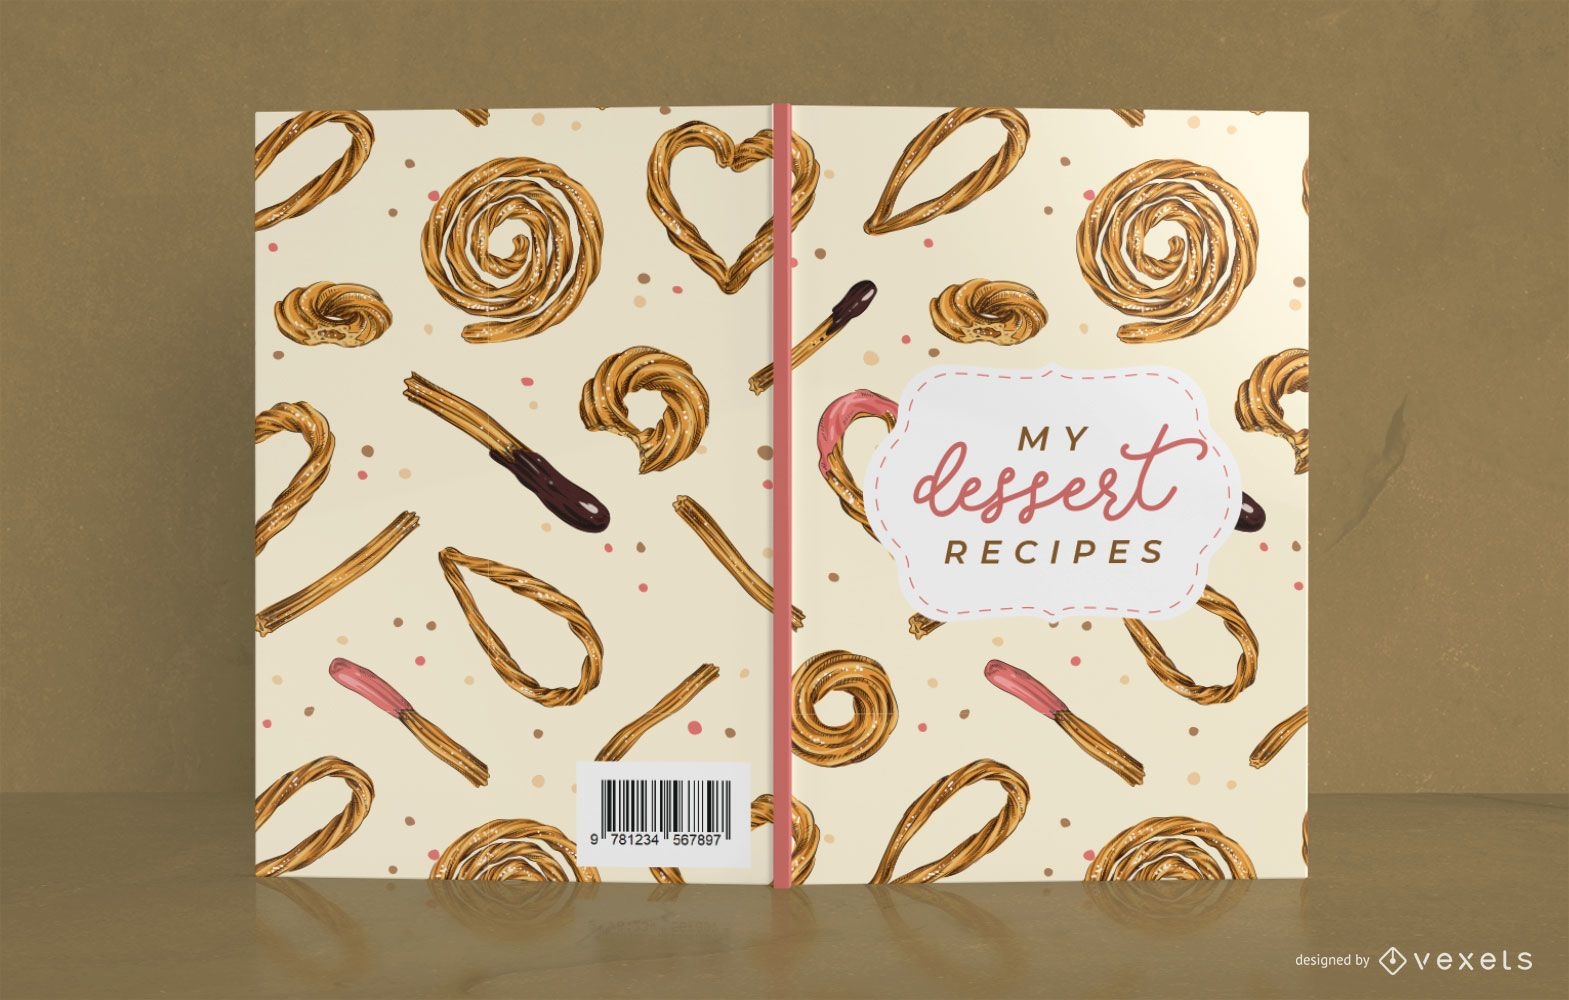 Diseño de portada de libro de recetas de postres